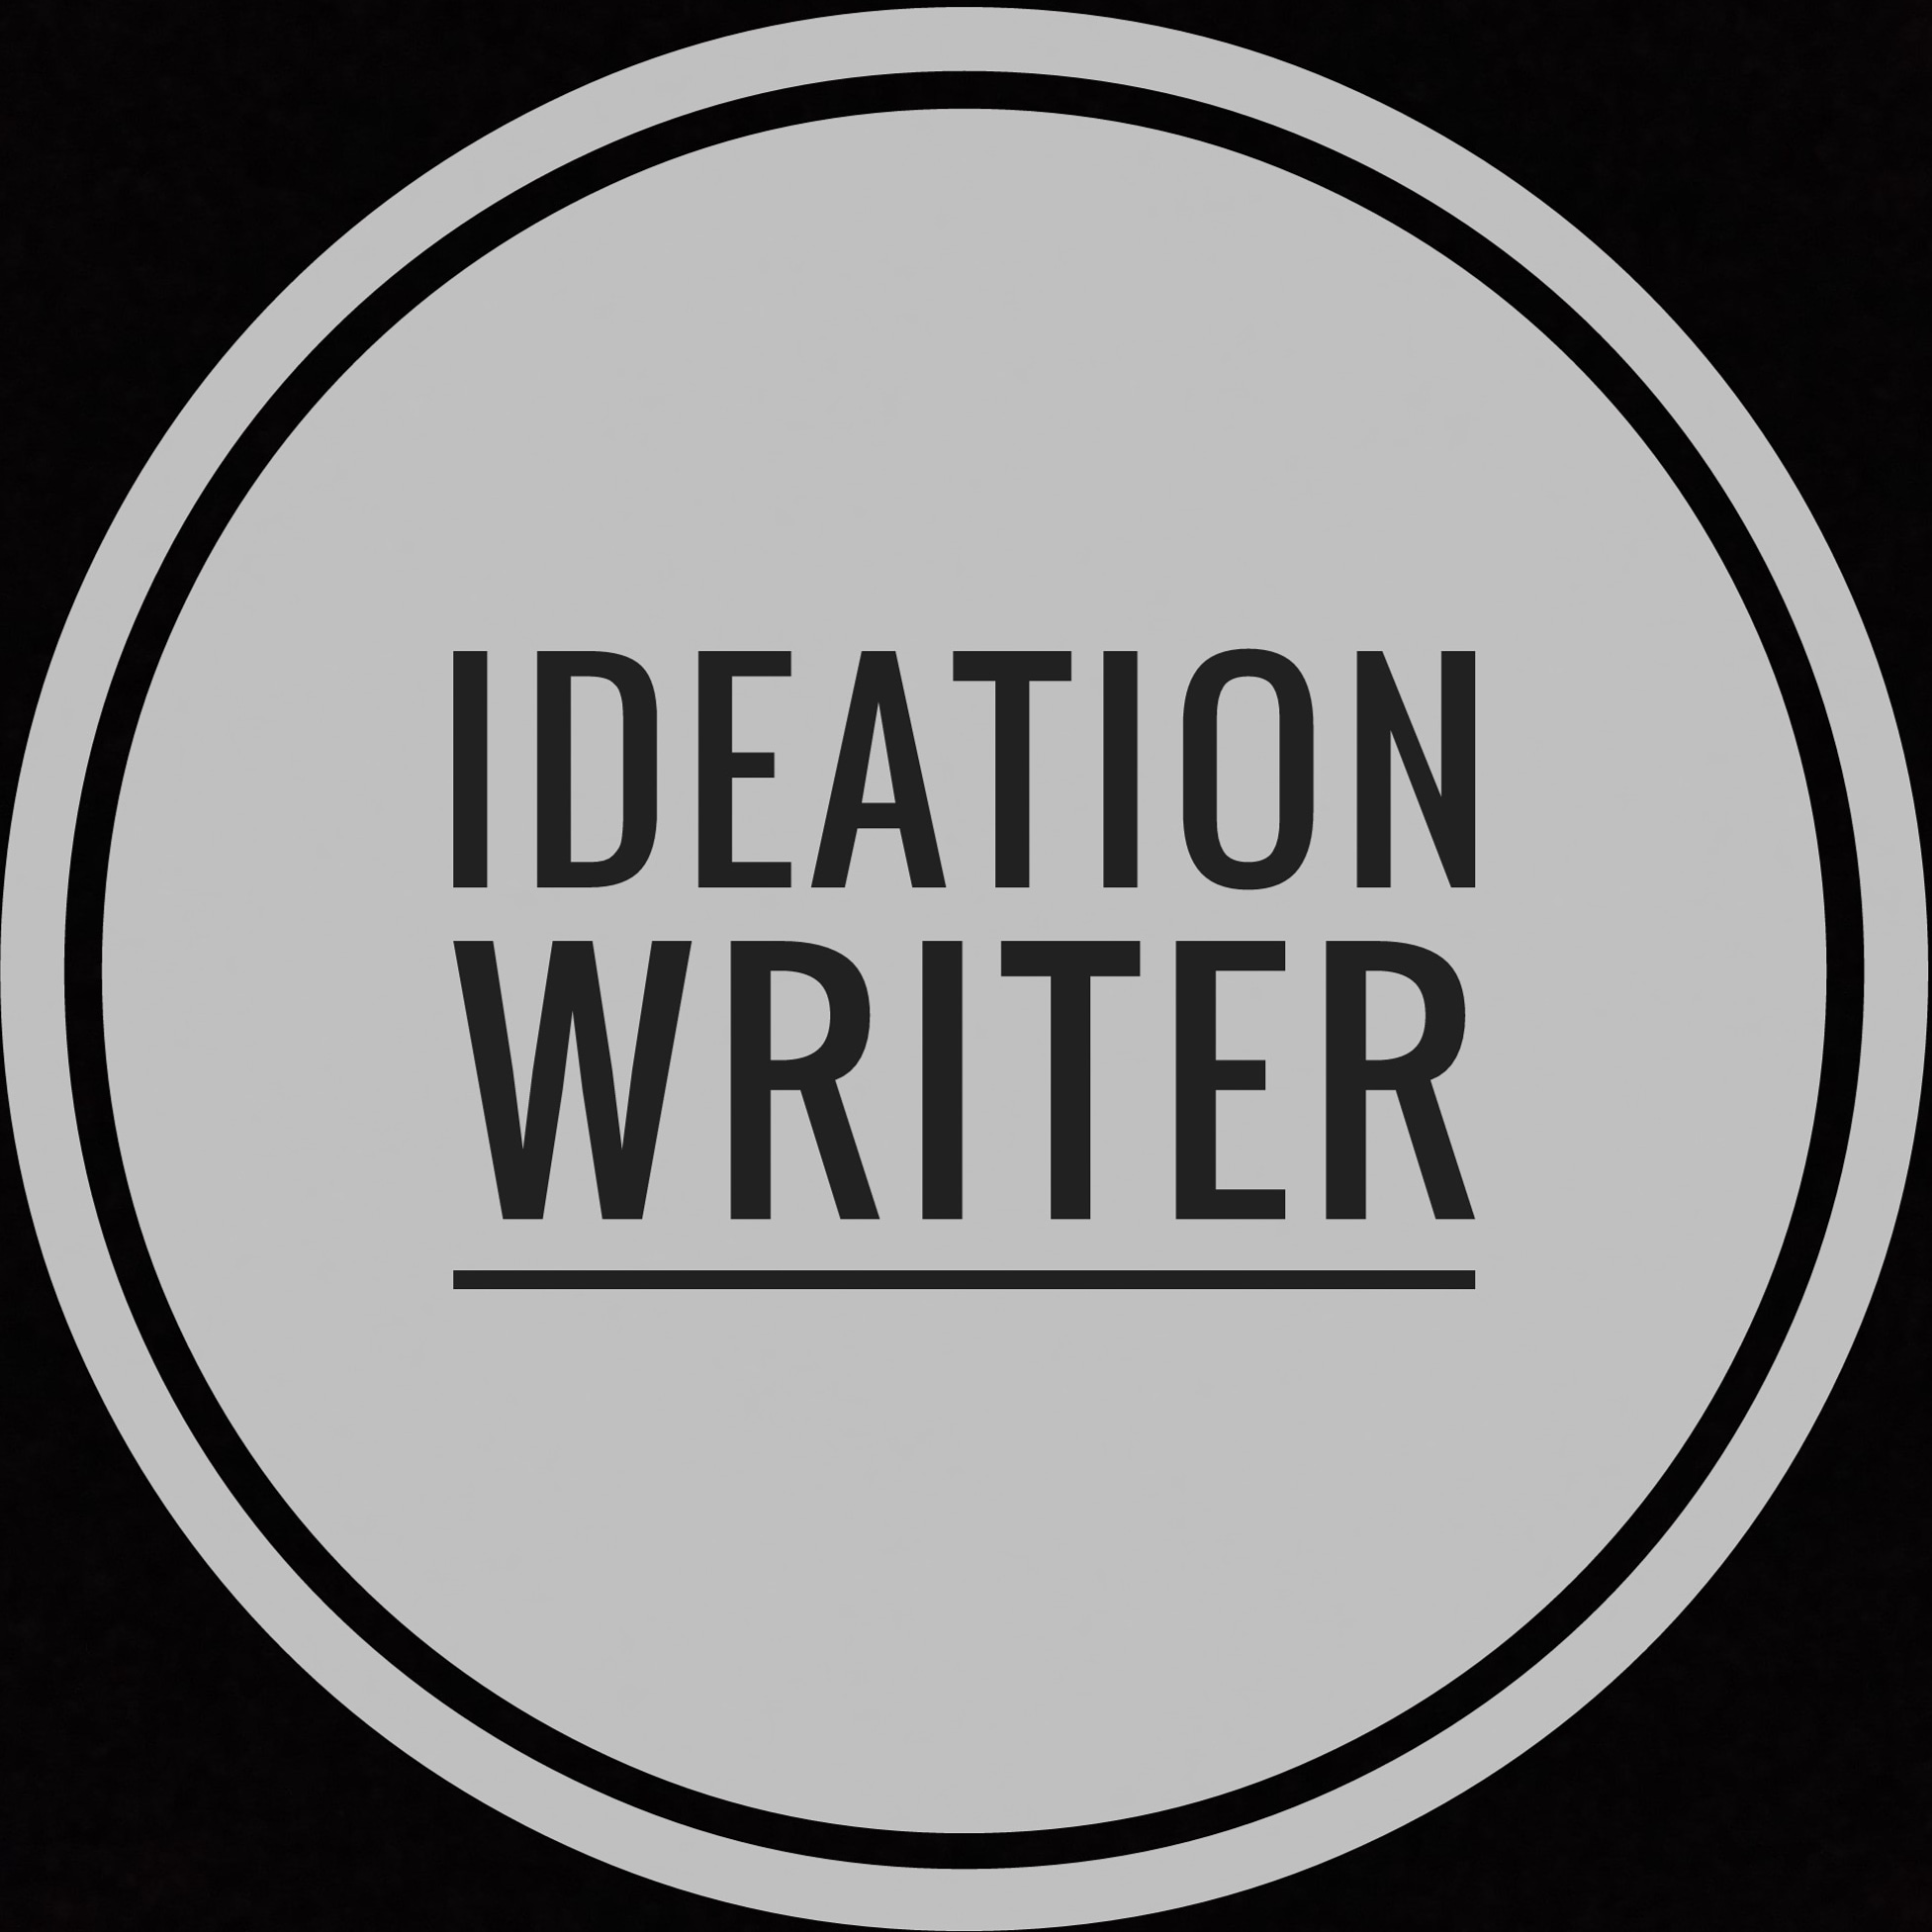 Ideation writer